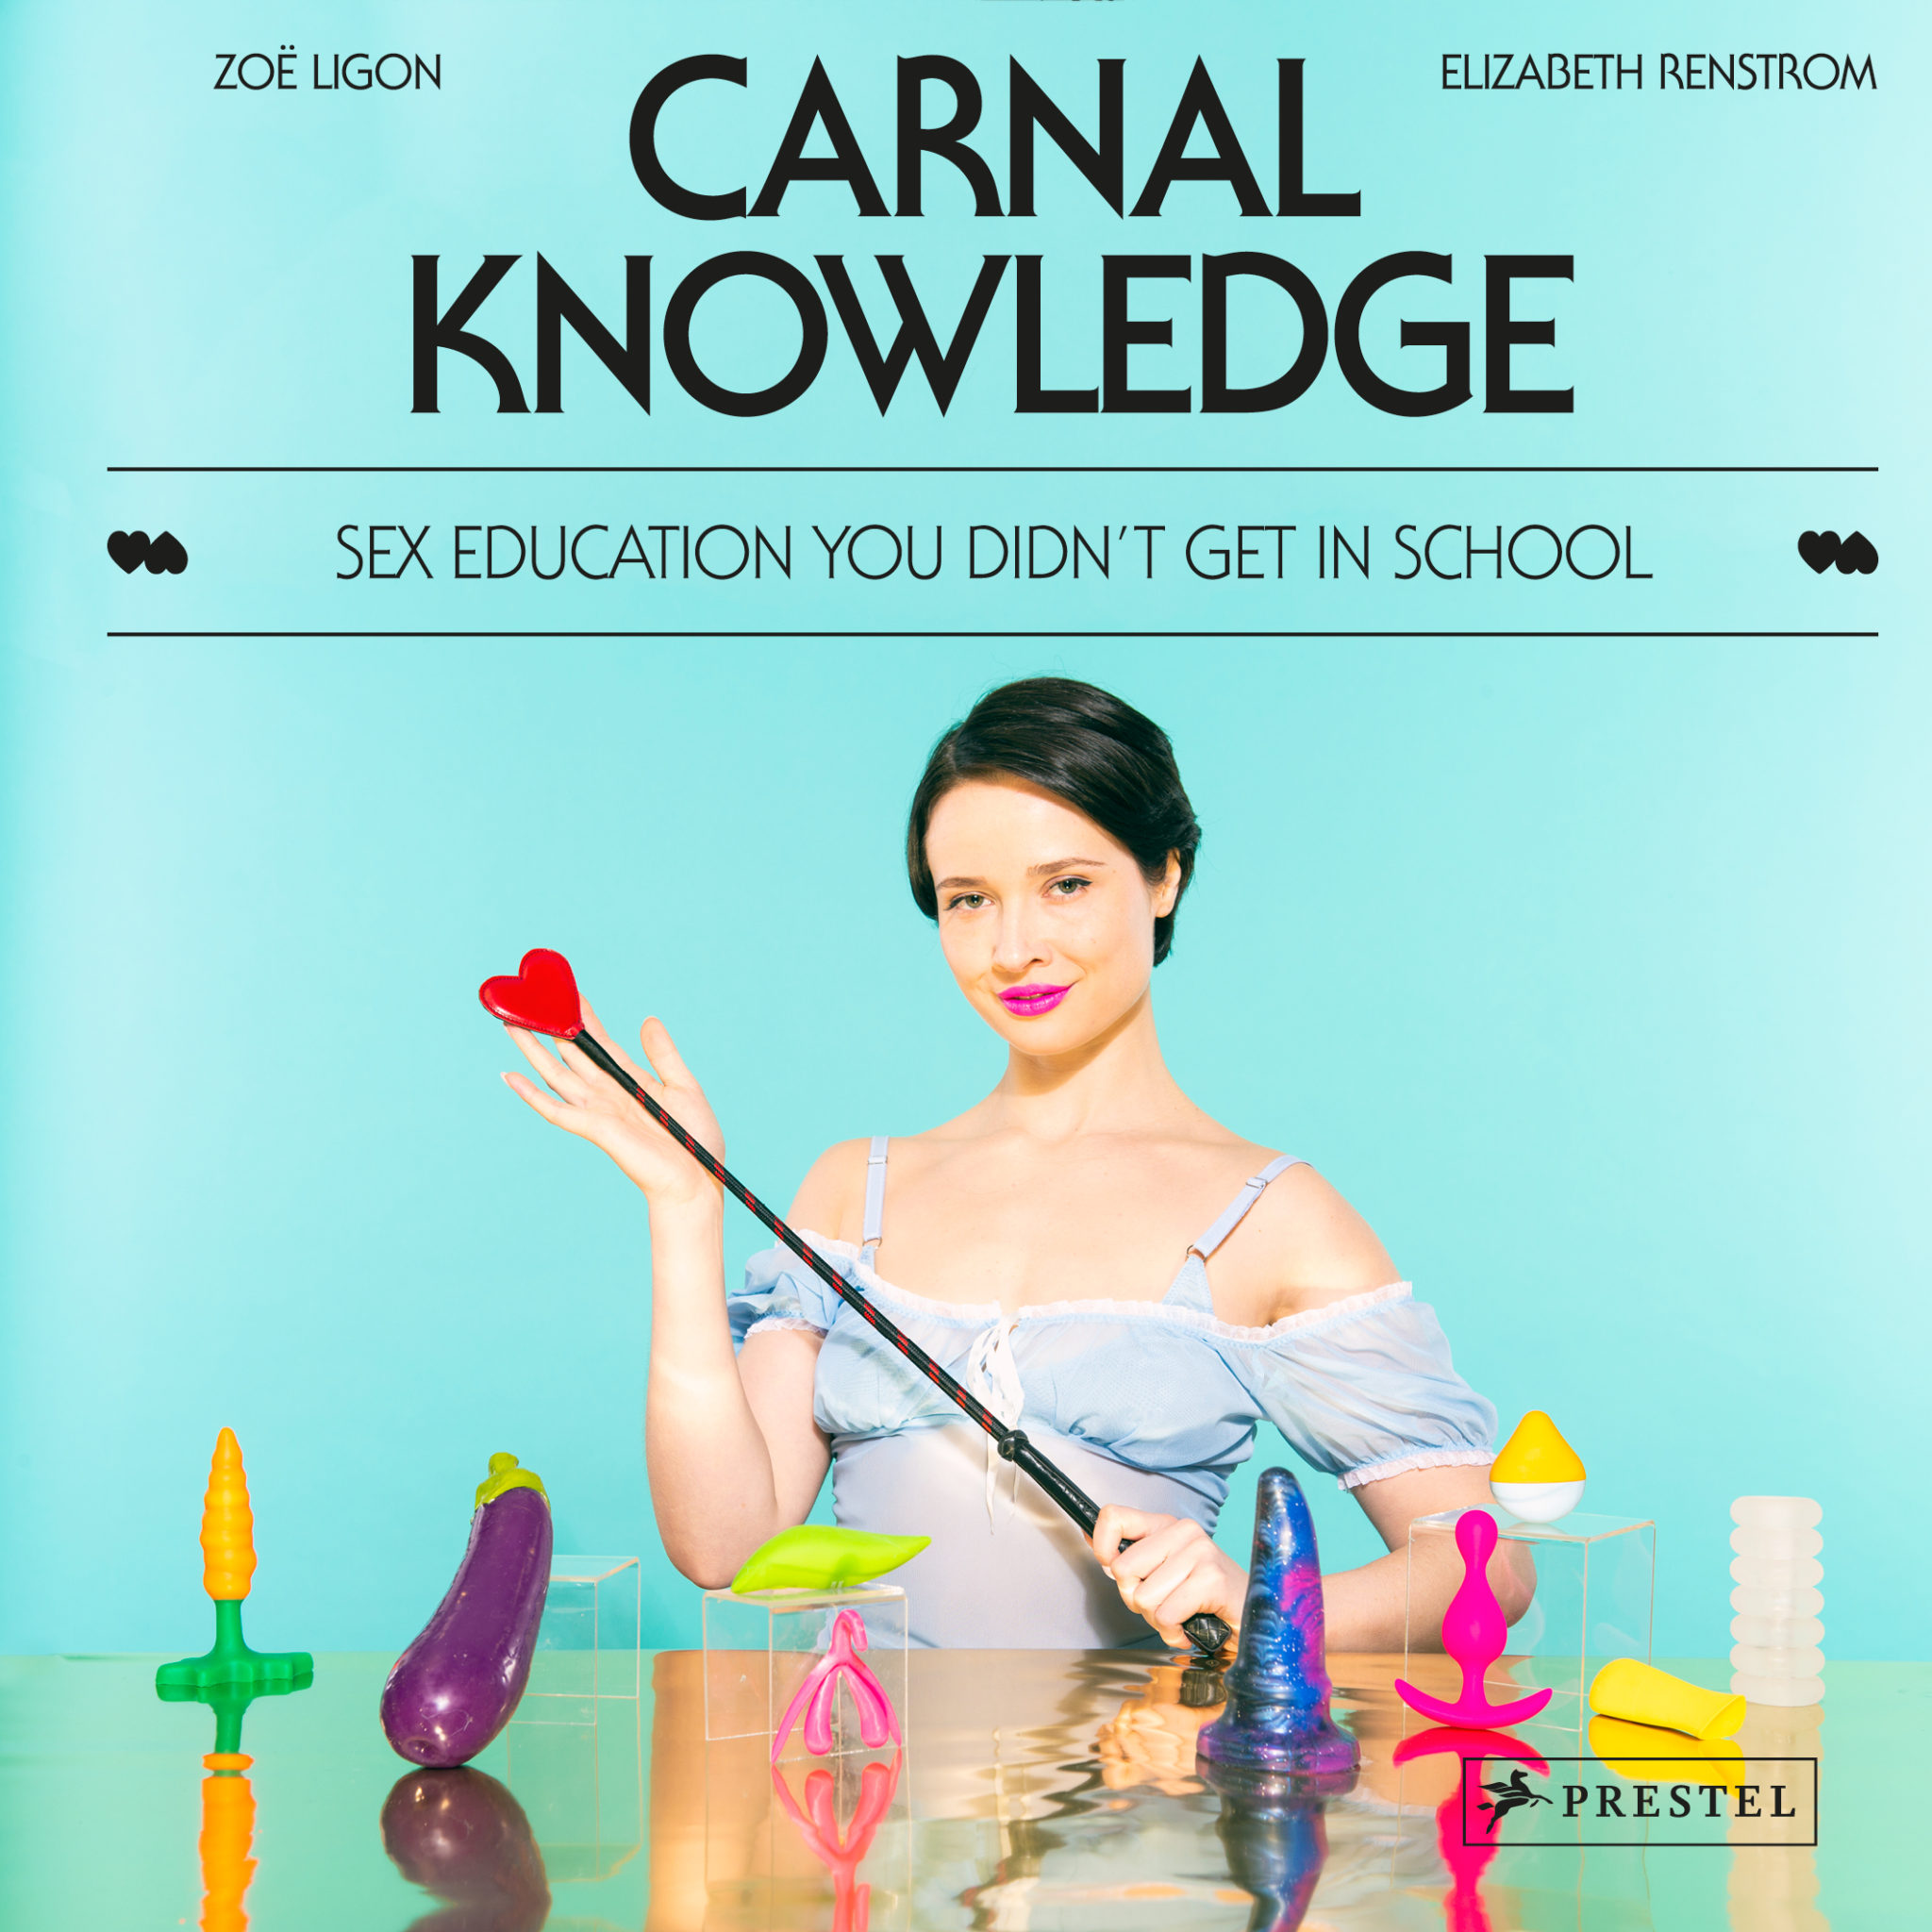 zoe ligon educates on carnal knowledge